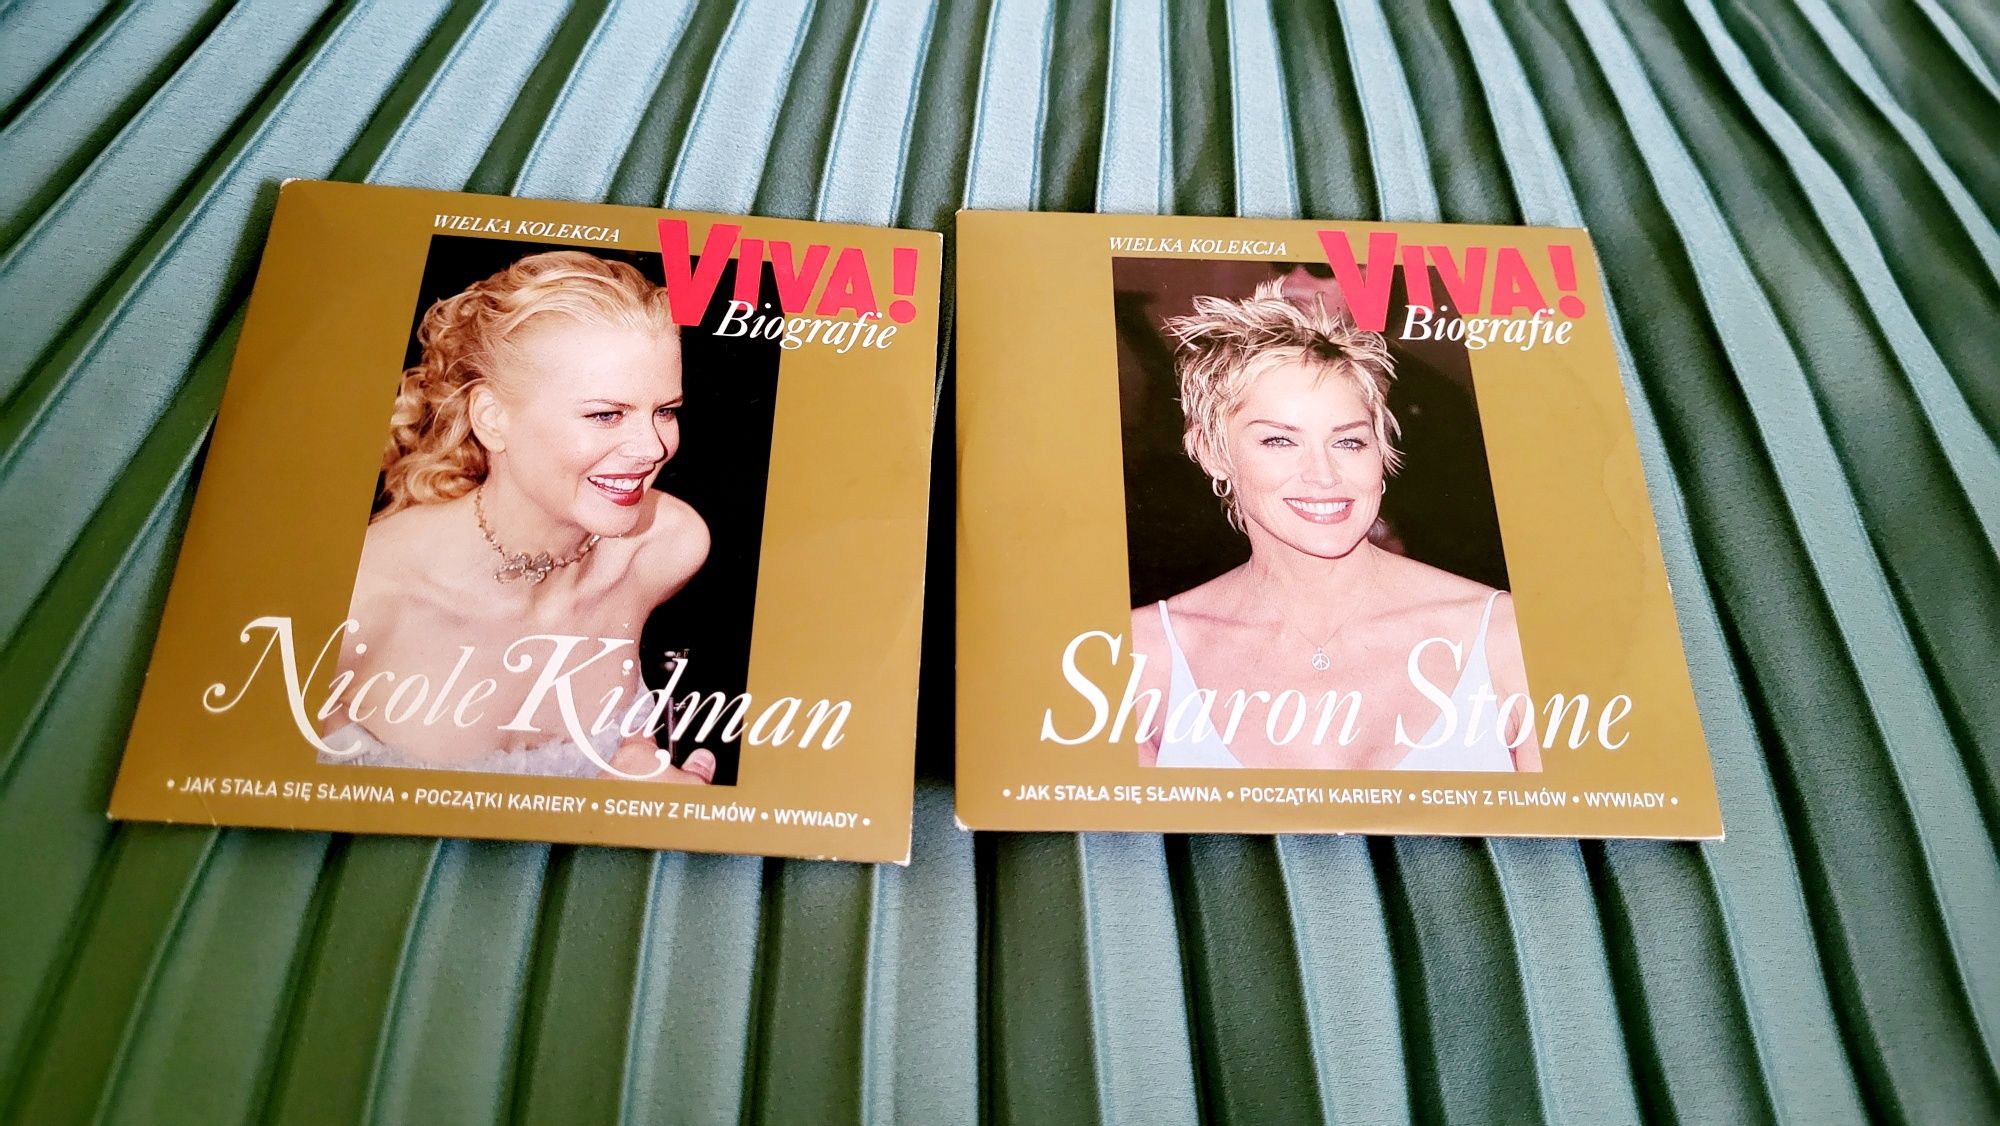 VIVA biografie na dvd filmowe Nicole Kidman Sharon Stone